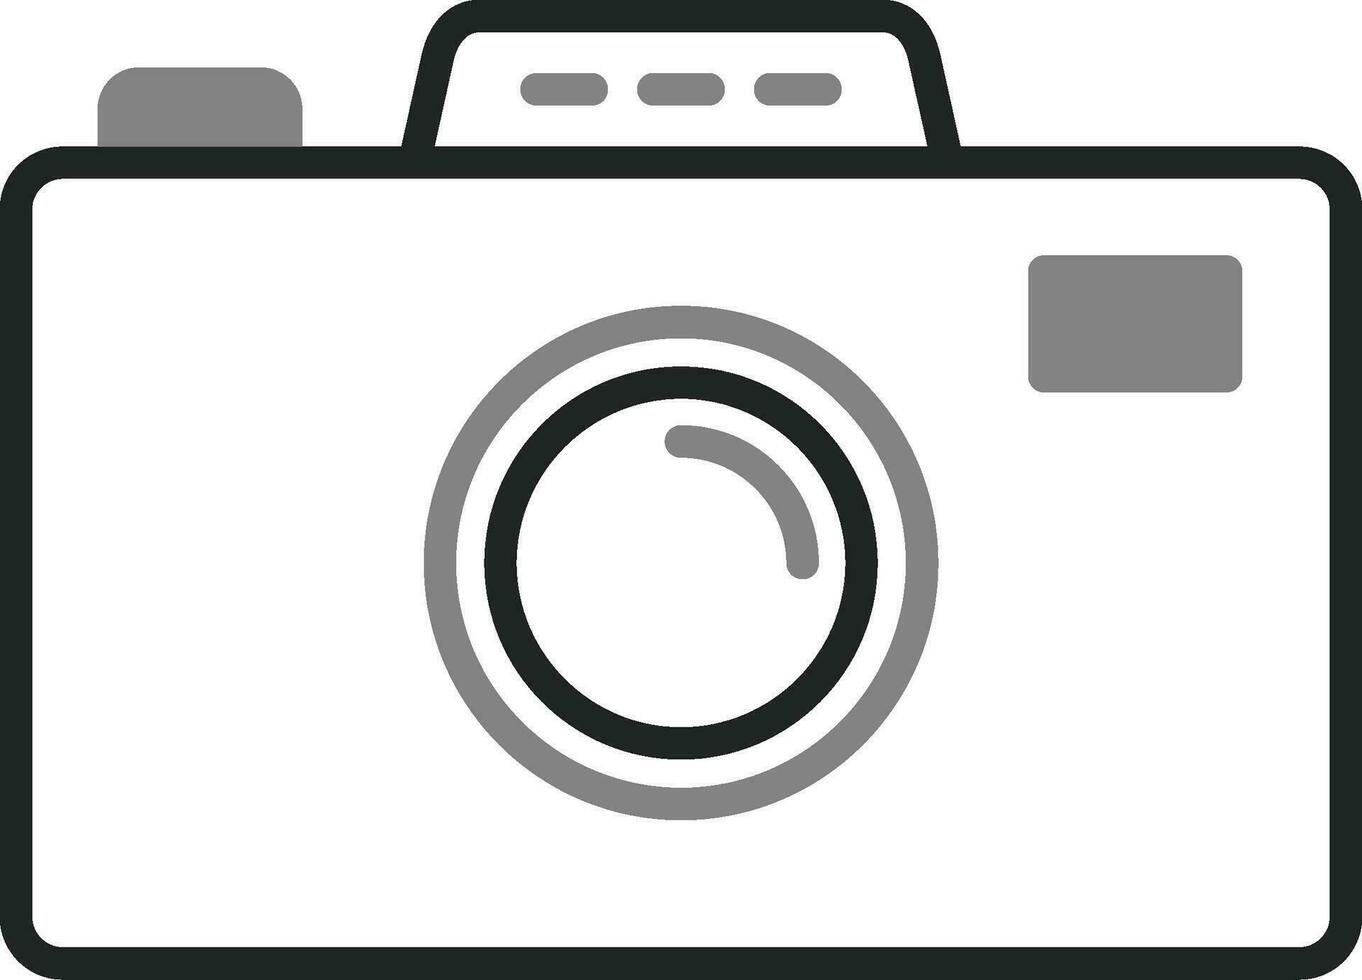 icône de vecteur de caméra photo